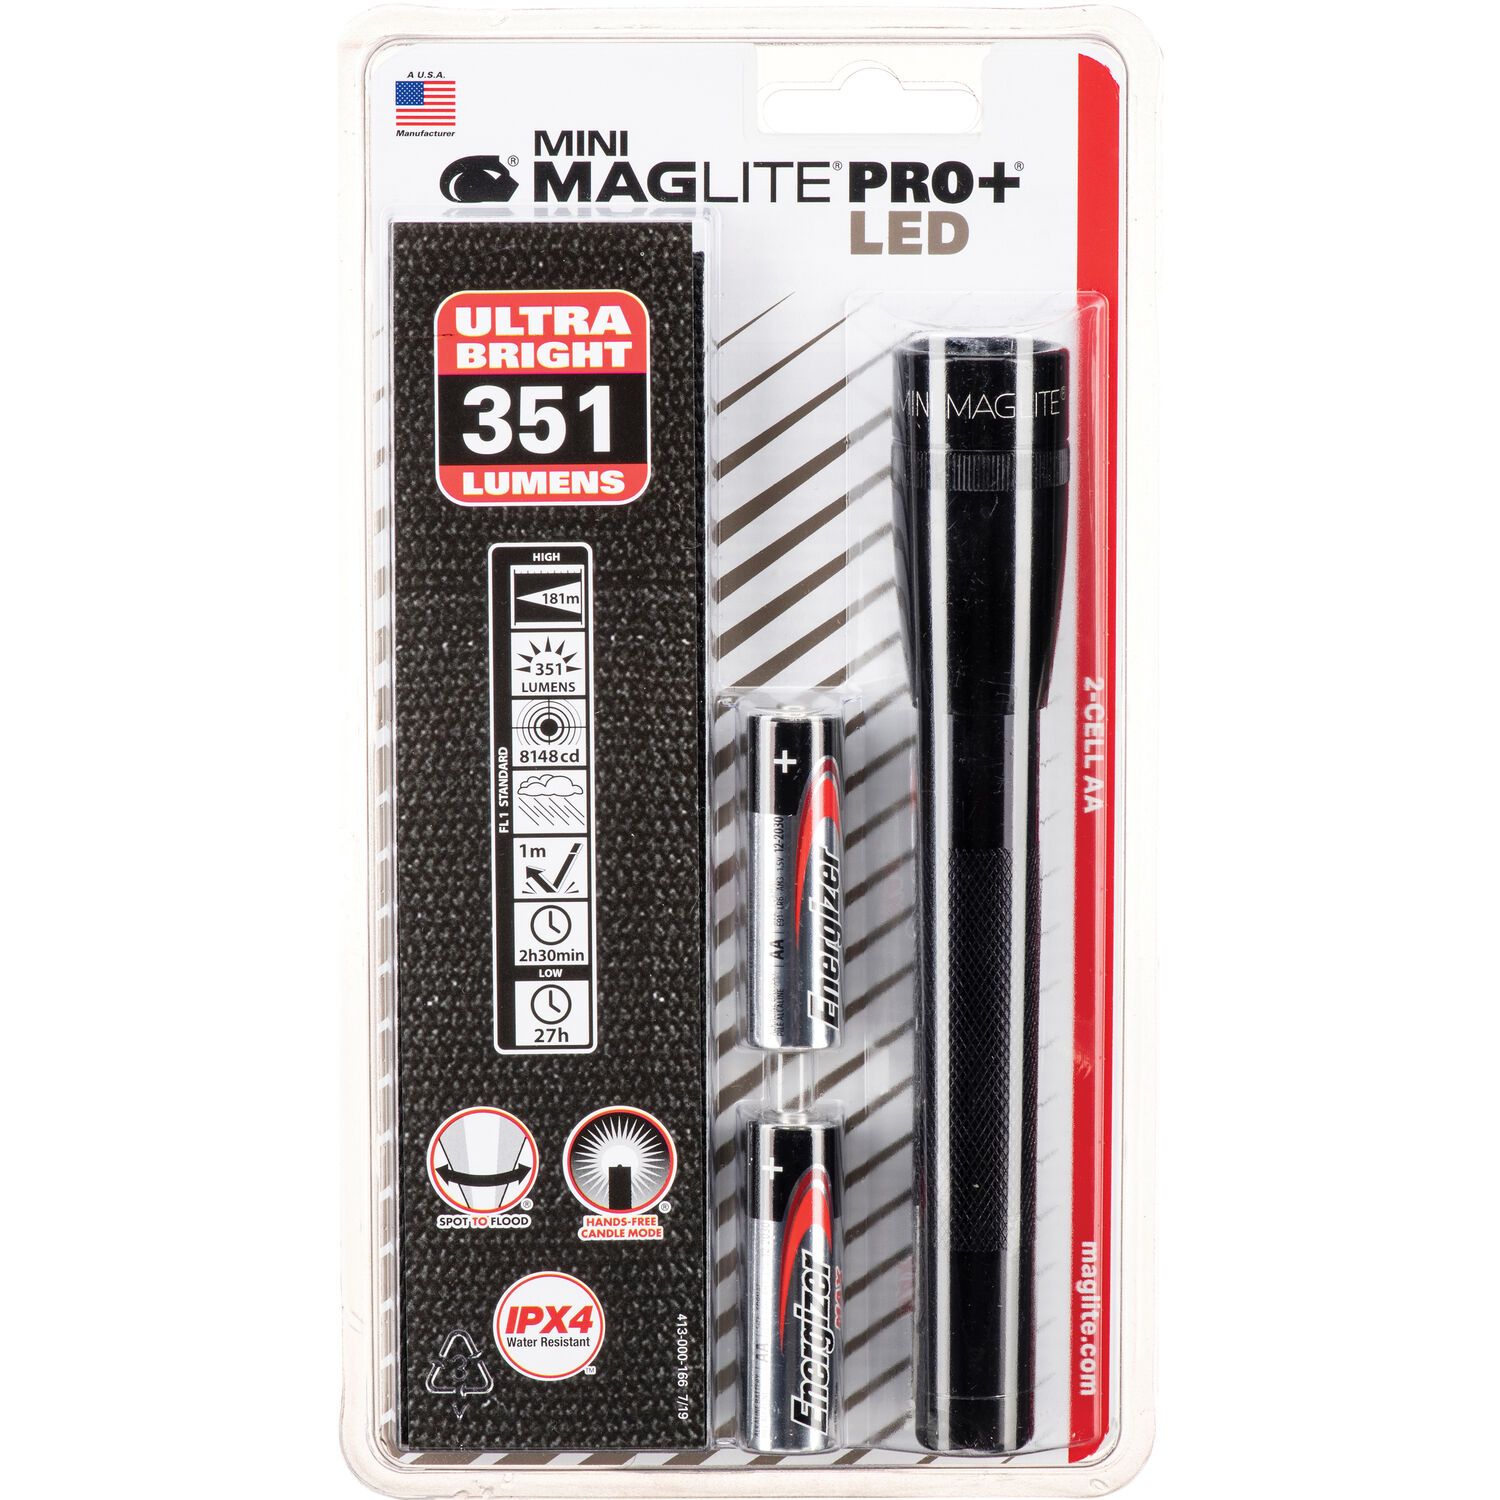 Maglite Mini Maglite Pro 2aa Led Flashlight With Holster